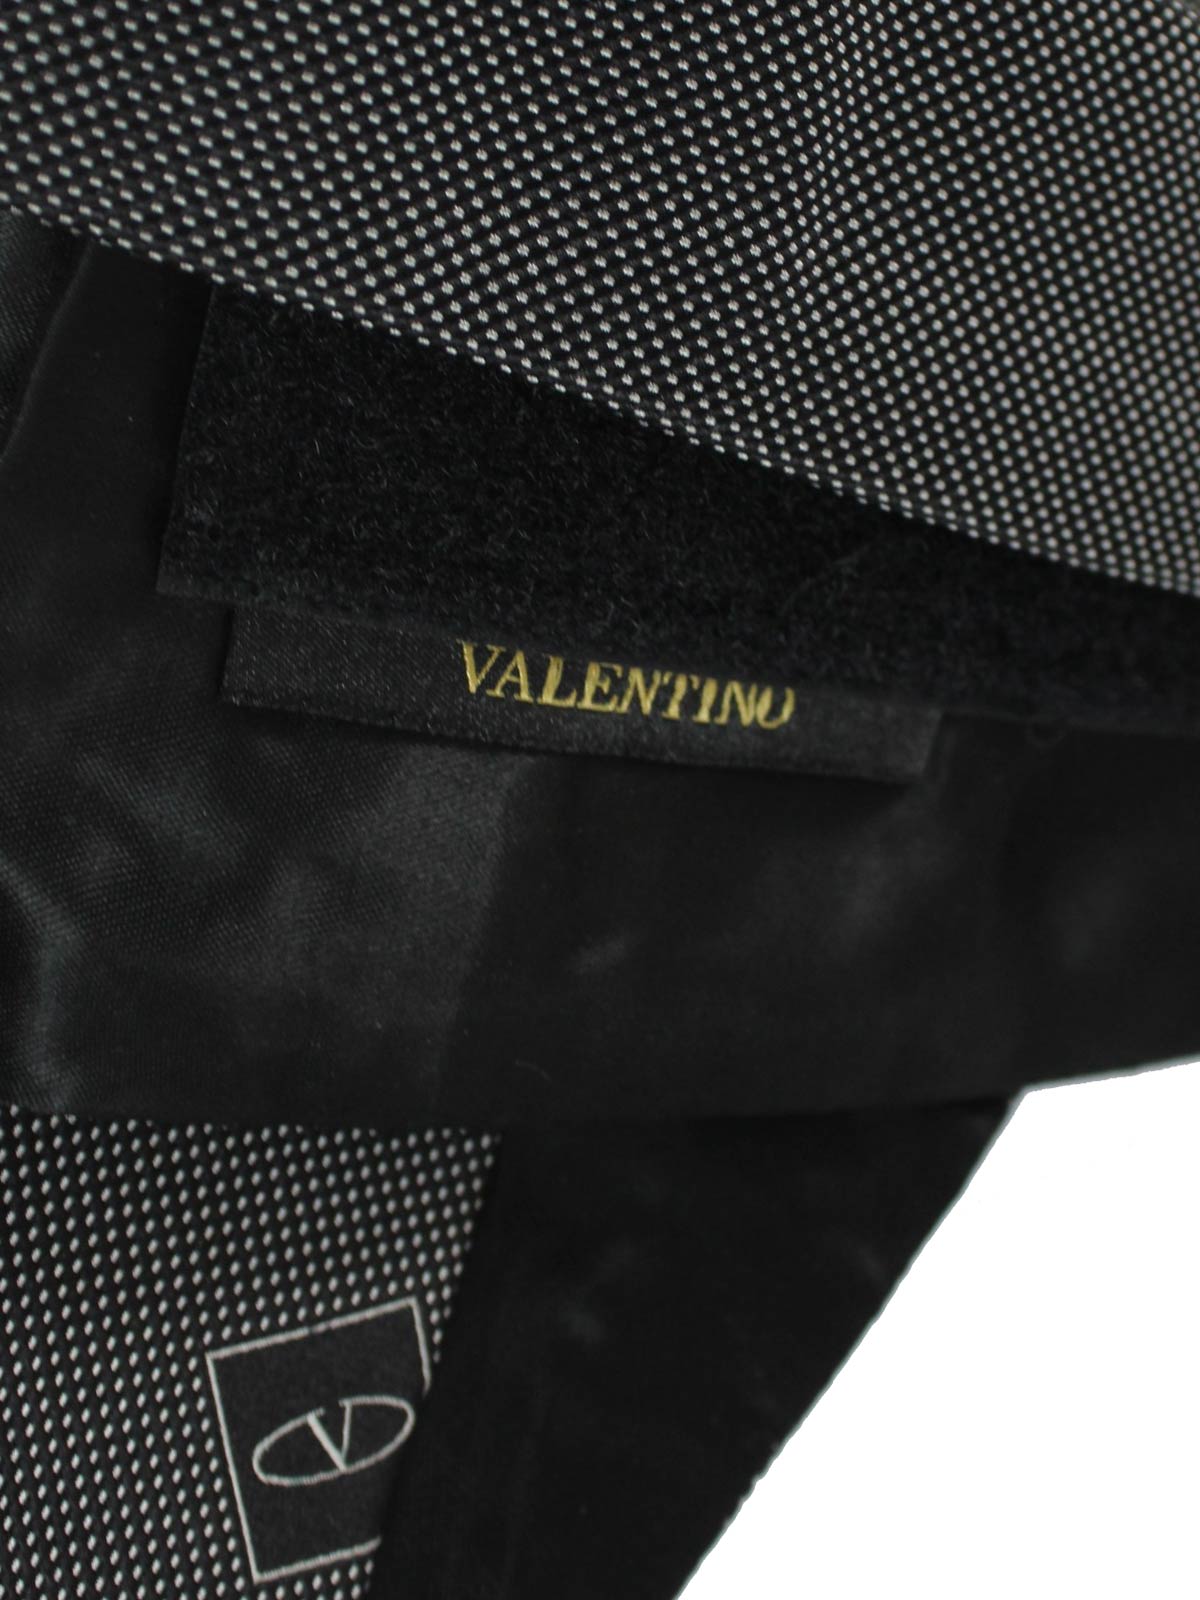 Valentino Silk Cummerbund Black Silver Micro Dots - Tuxedo FINAL SALE